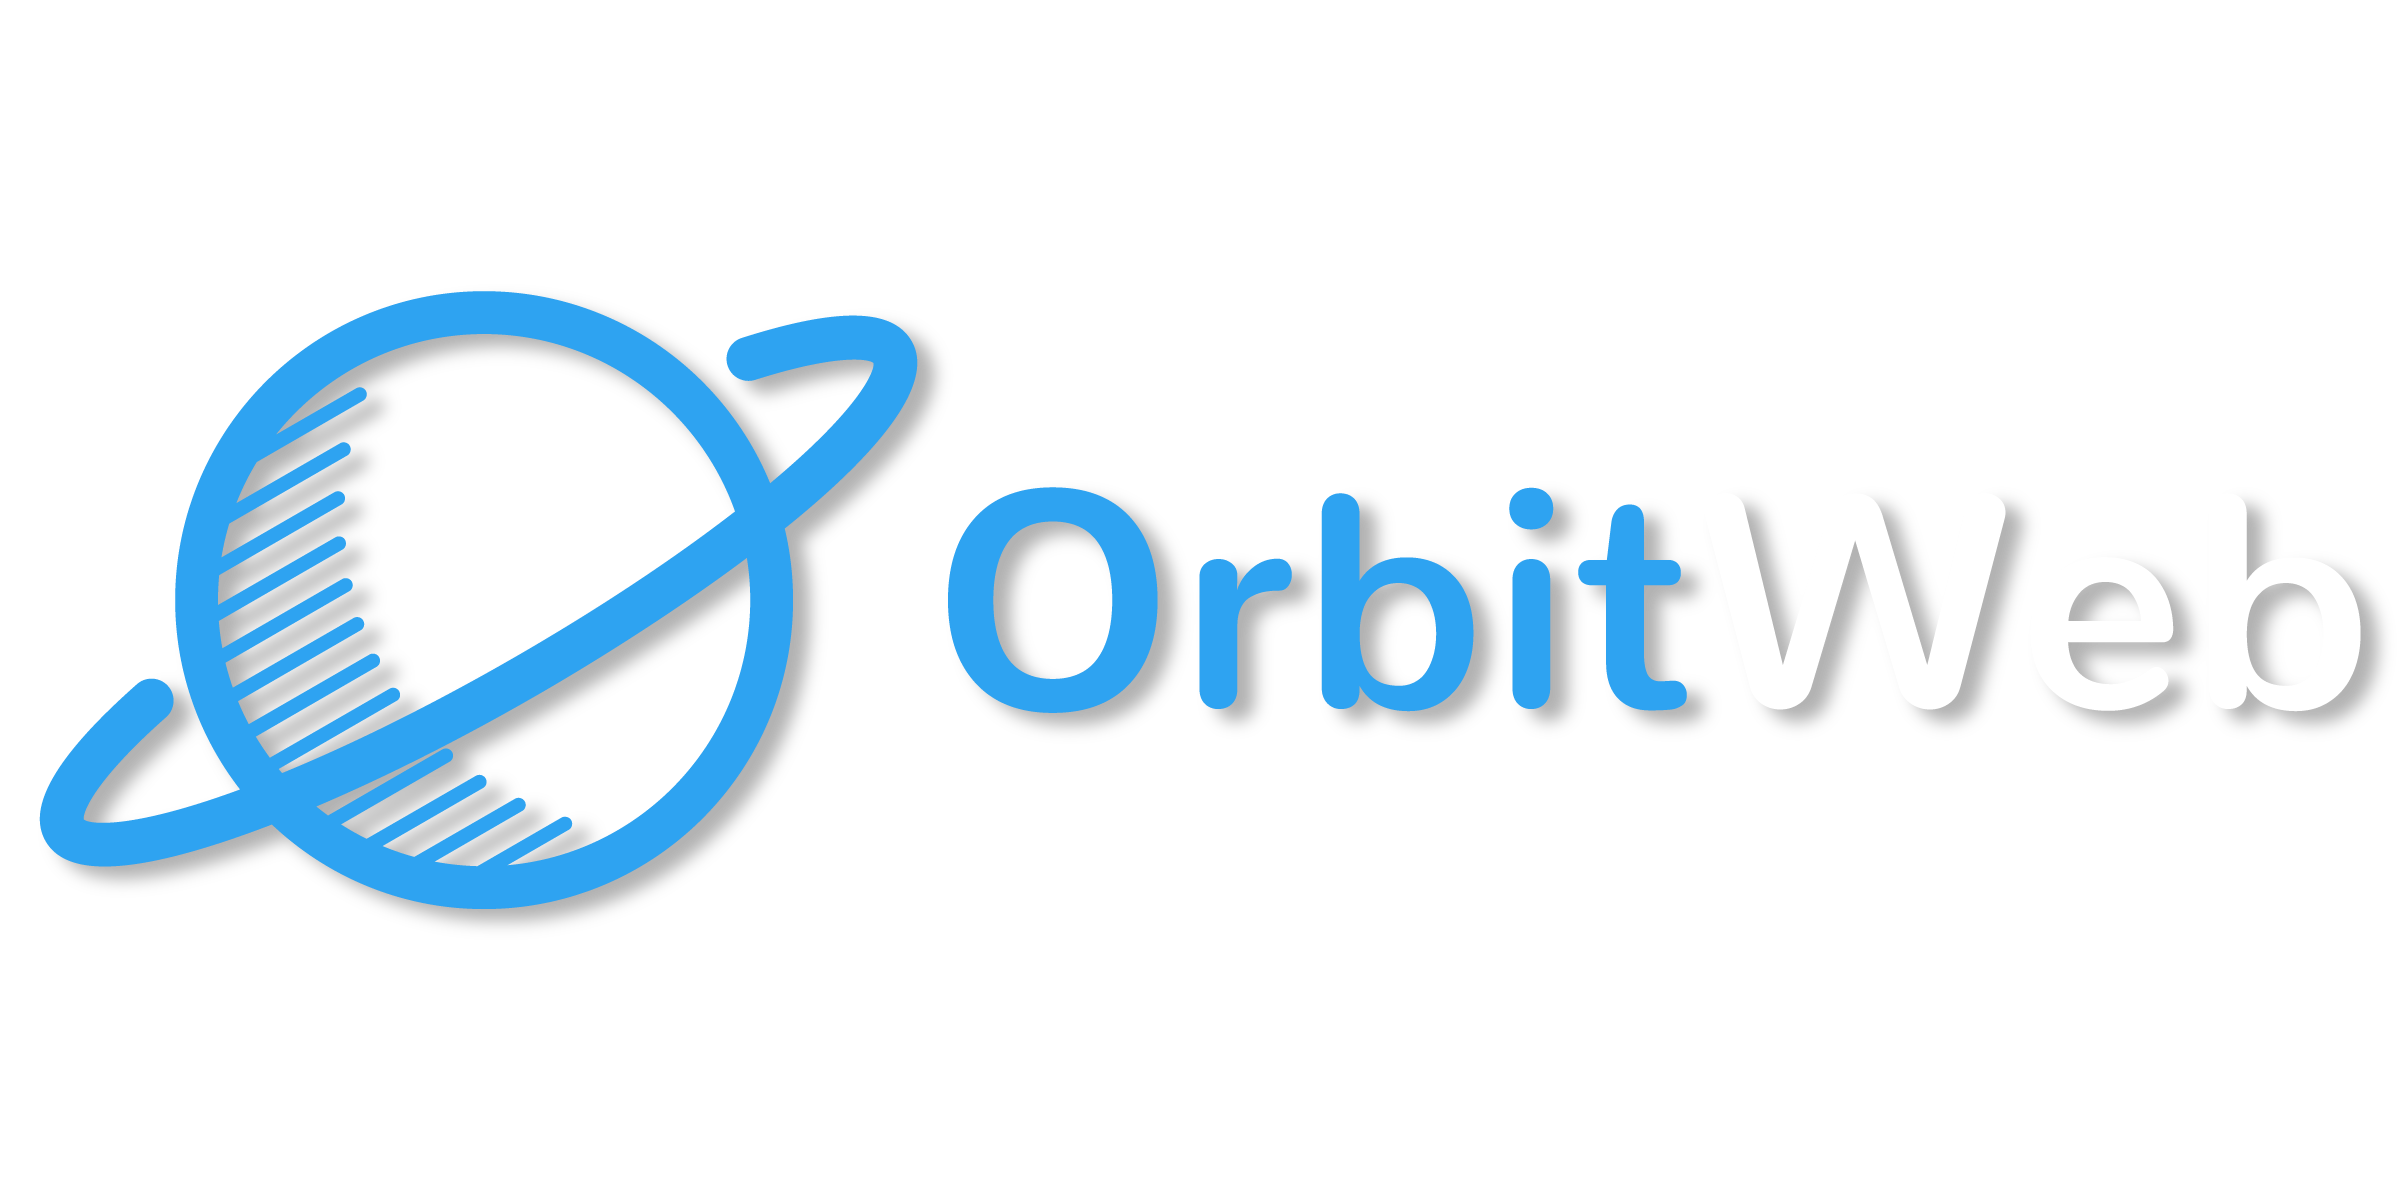 OrbitWeb, a chatbot developer